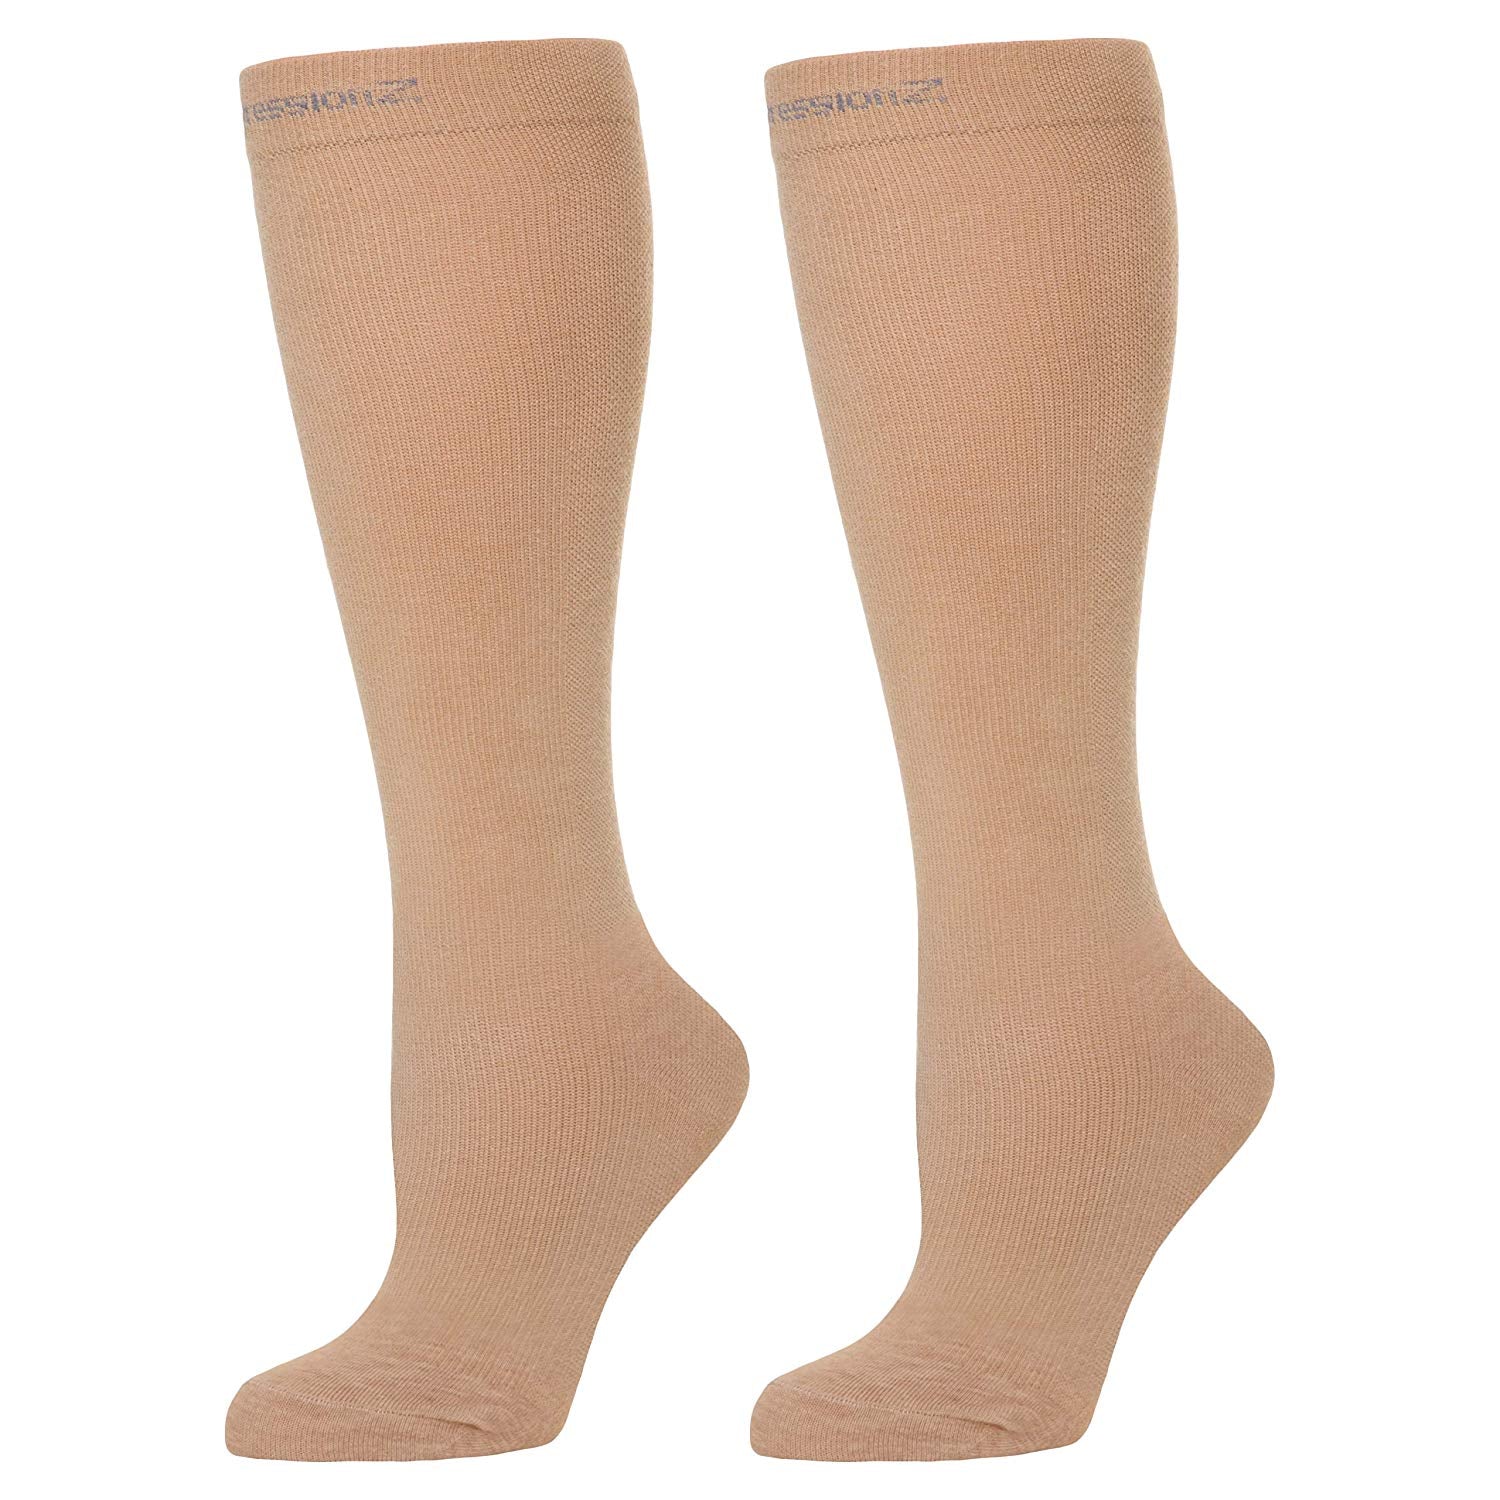 20 30 mmhg compression socks